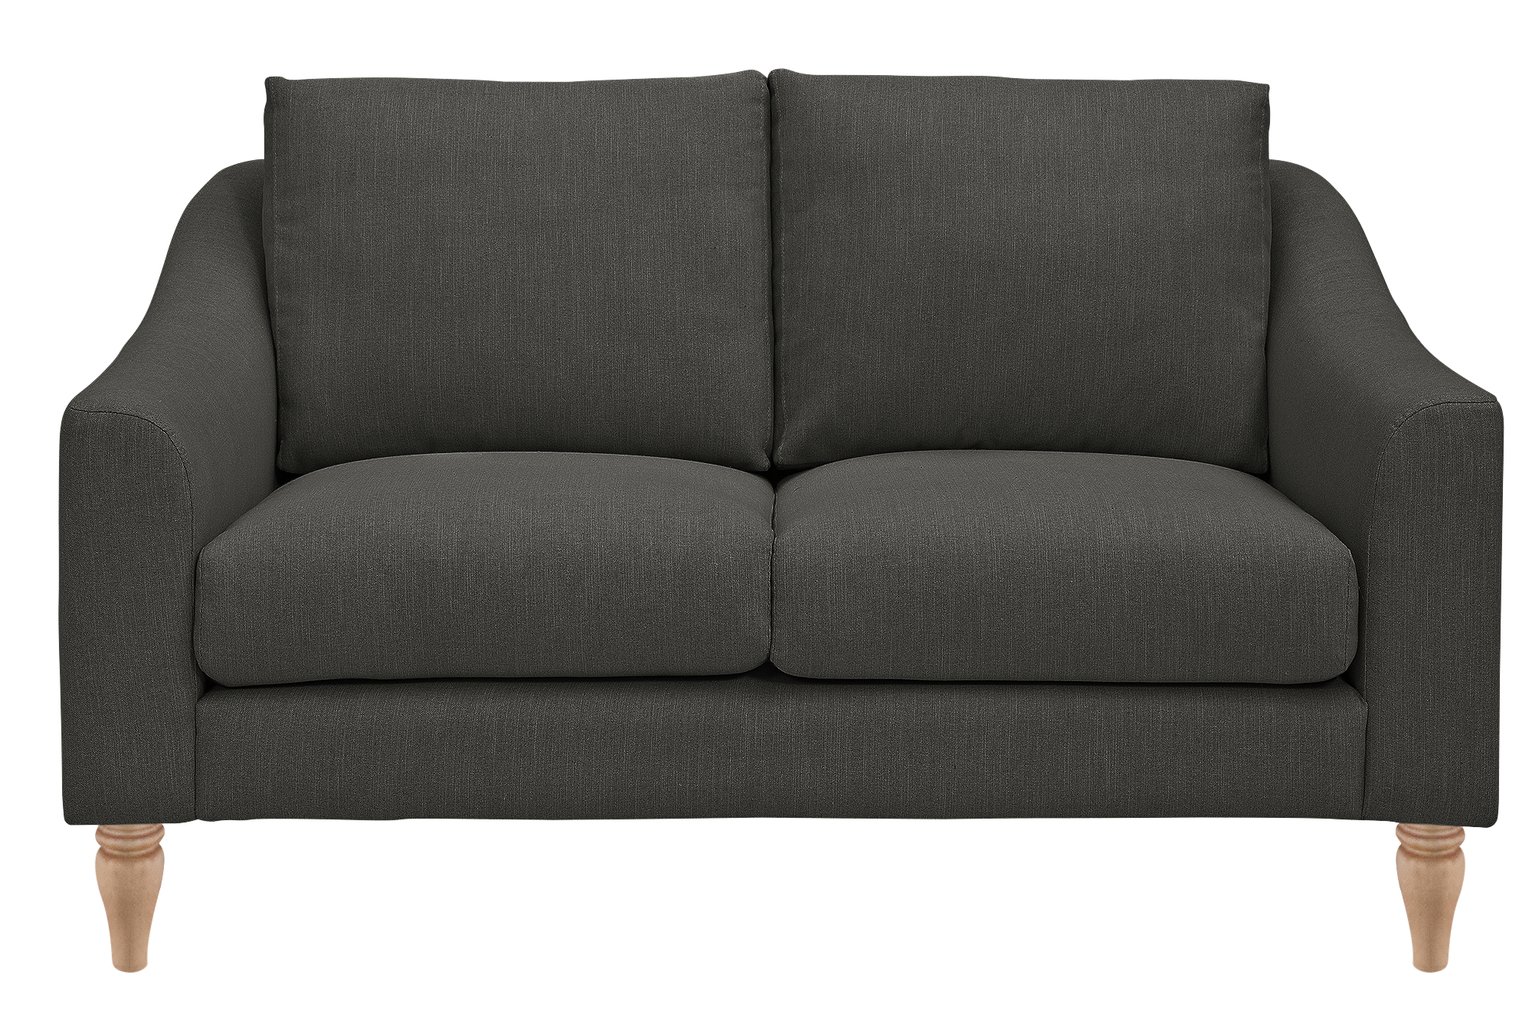 Argos Home Cameron 2 Seater Fabric Sofa - Charcoal